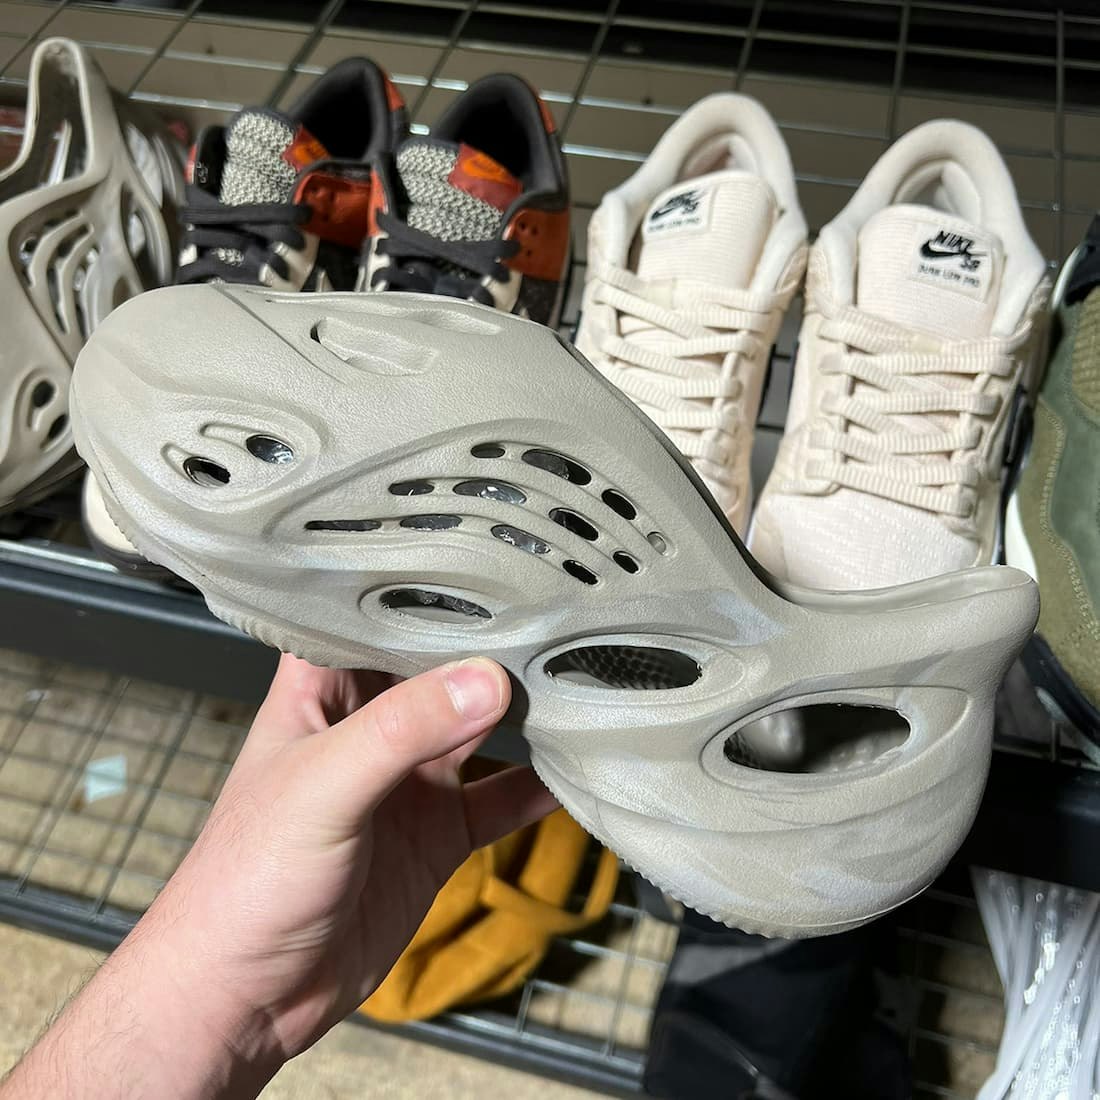 adidas Yeezy Foam Runner "Greyscale"